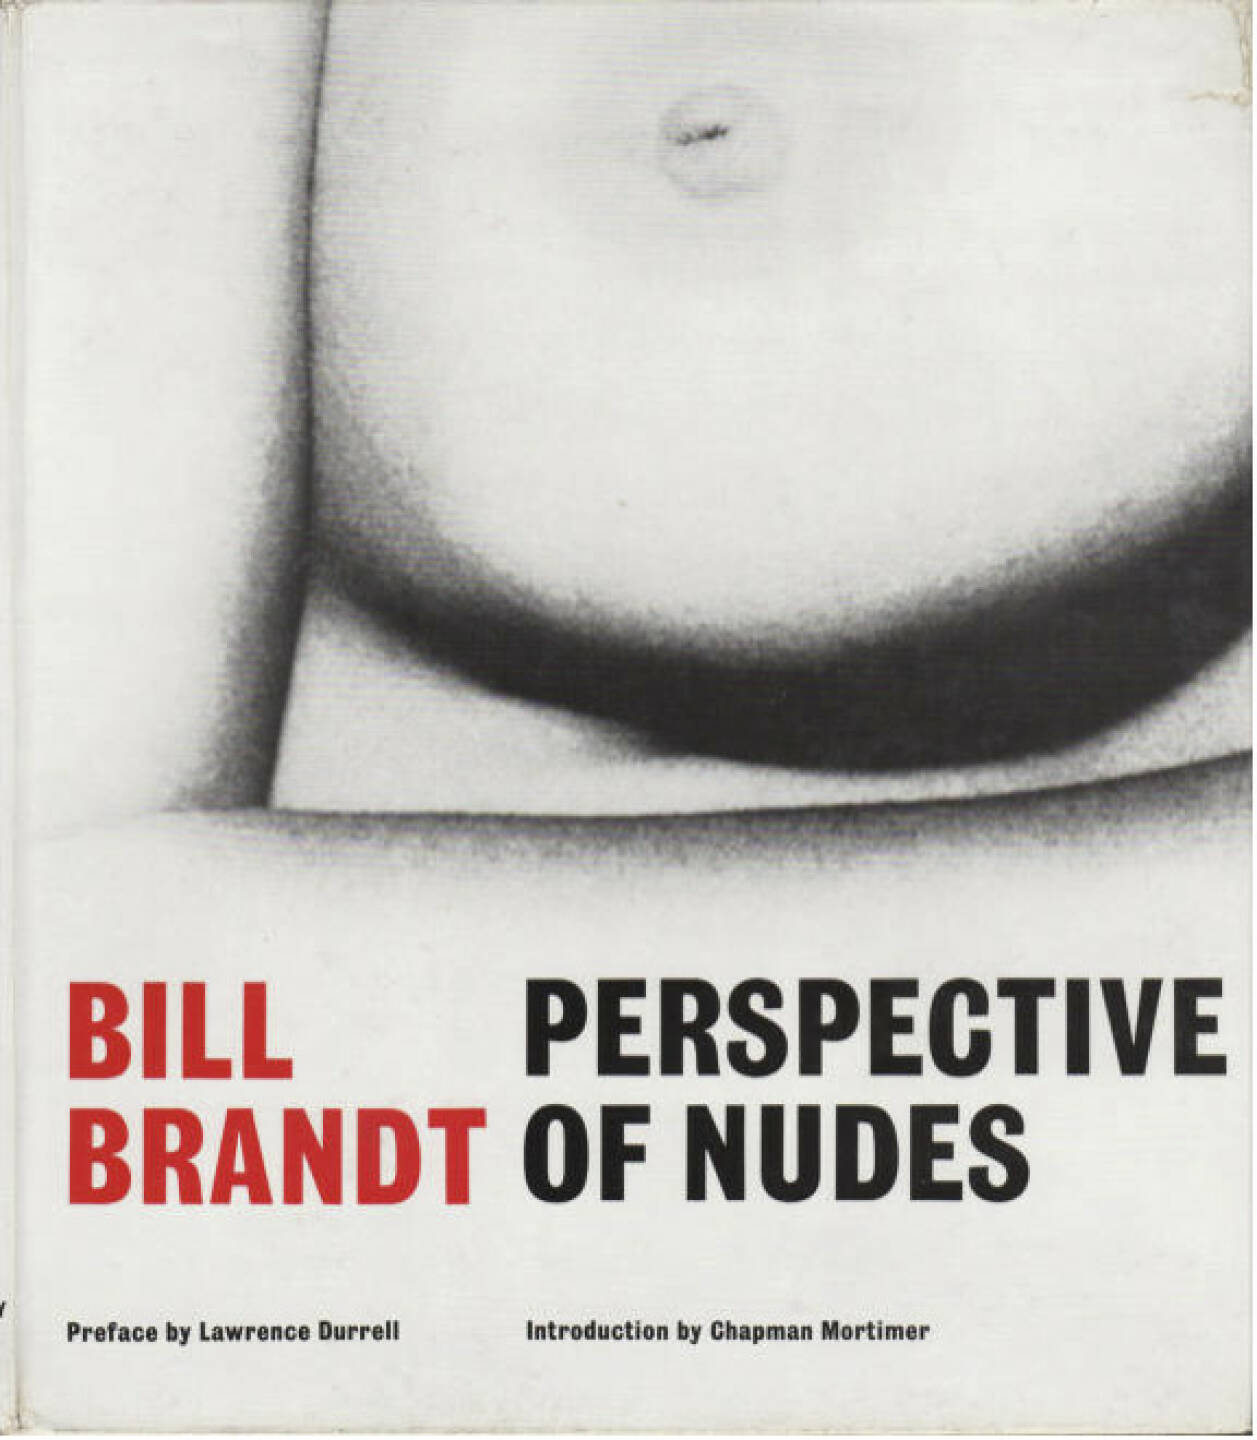 Bill Brandt - Perspective of Nudes, Preis 500-1000 Euro - http://josefchladek.com/book/bill_brandt_-_perspective_of_nudes